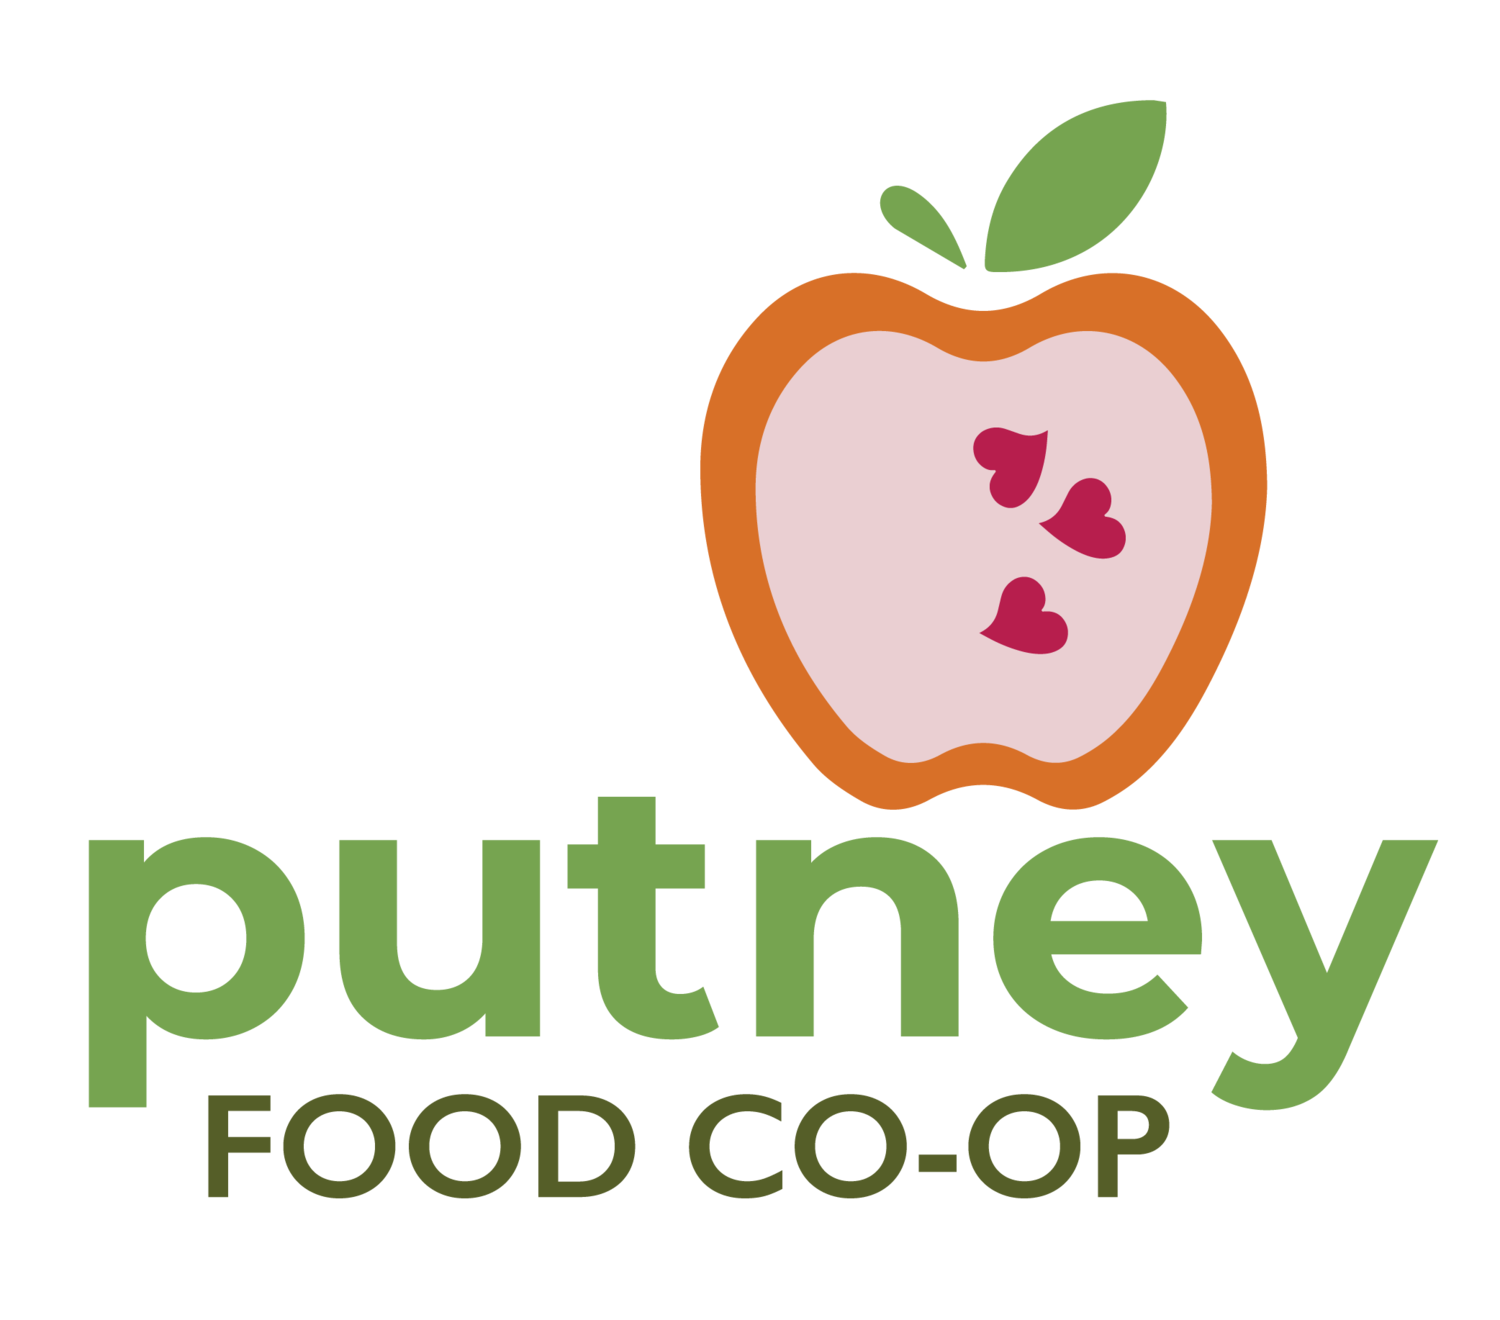 The Putney Food Coop